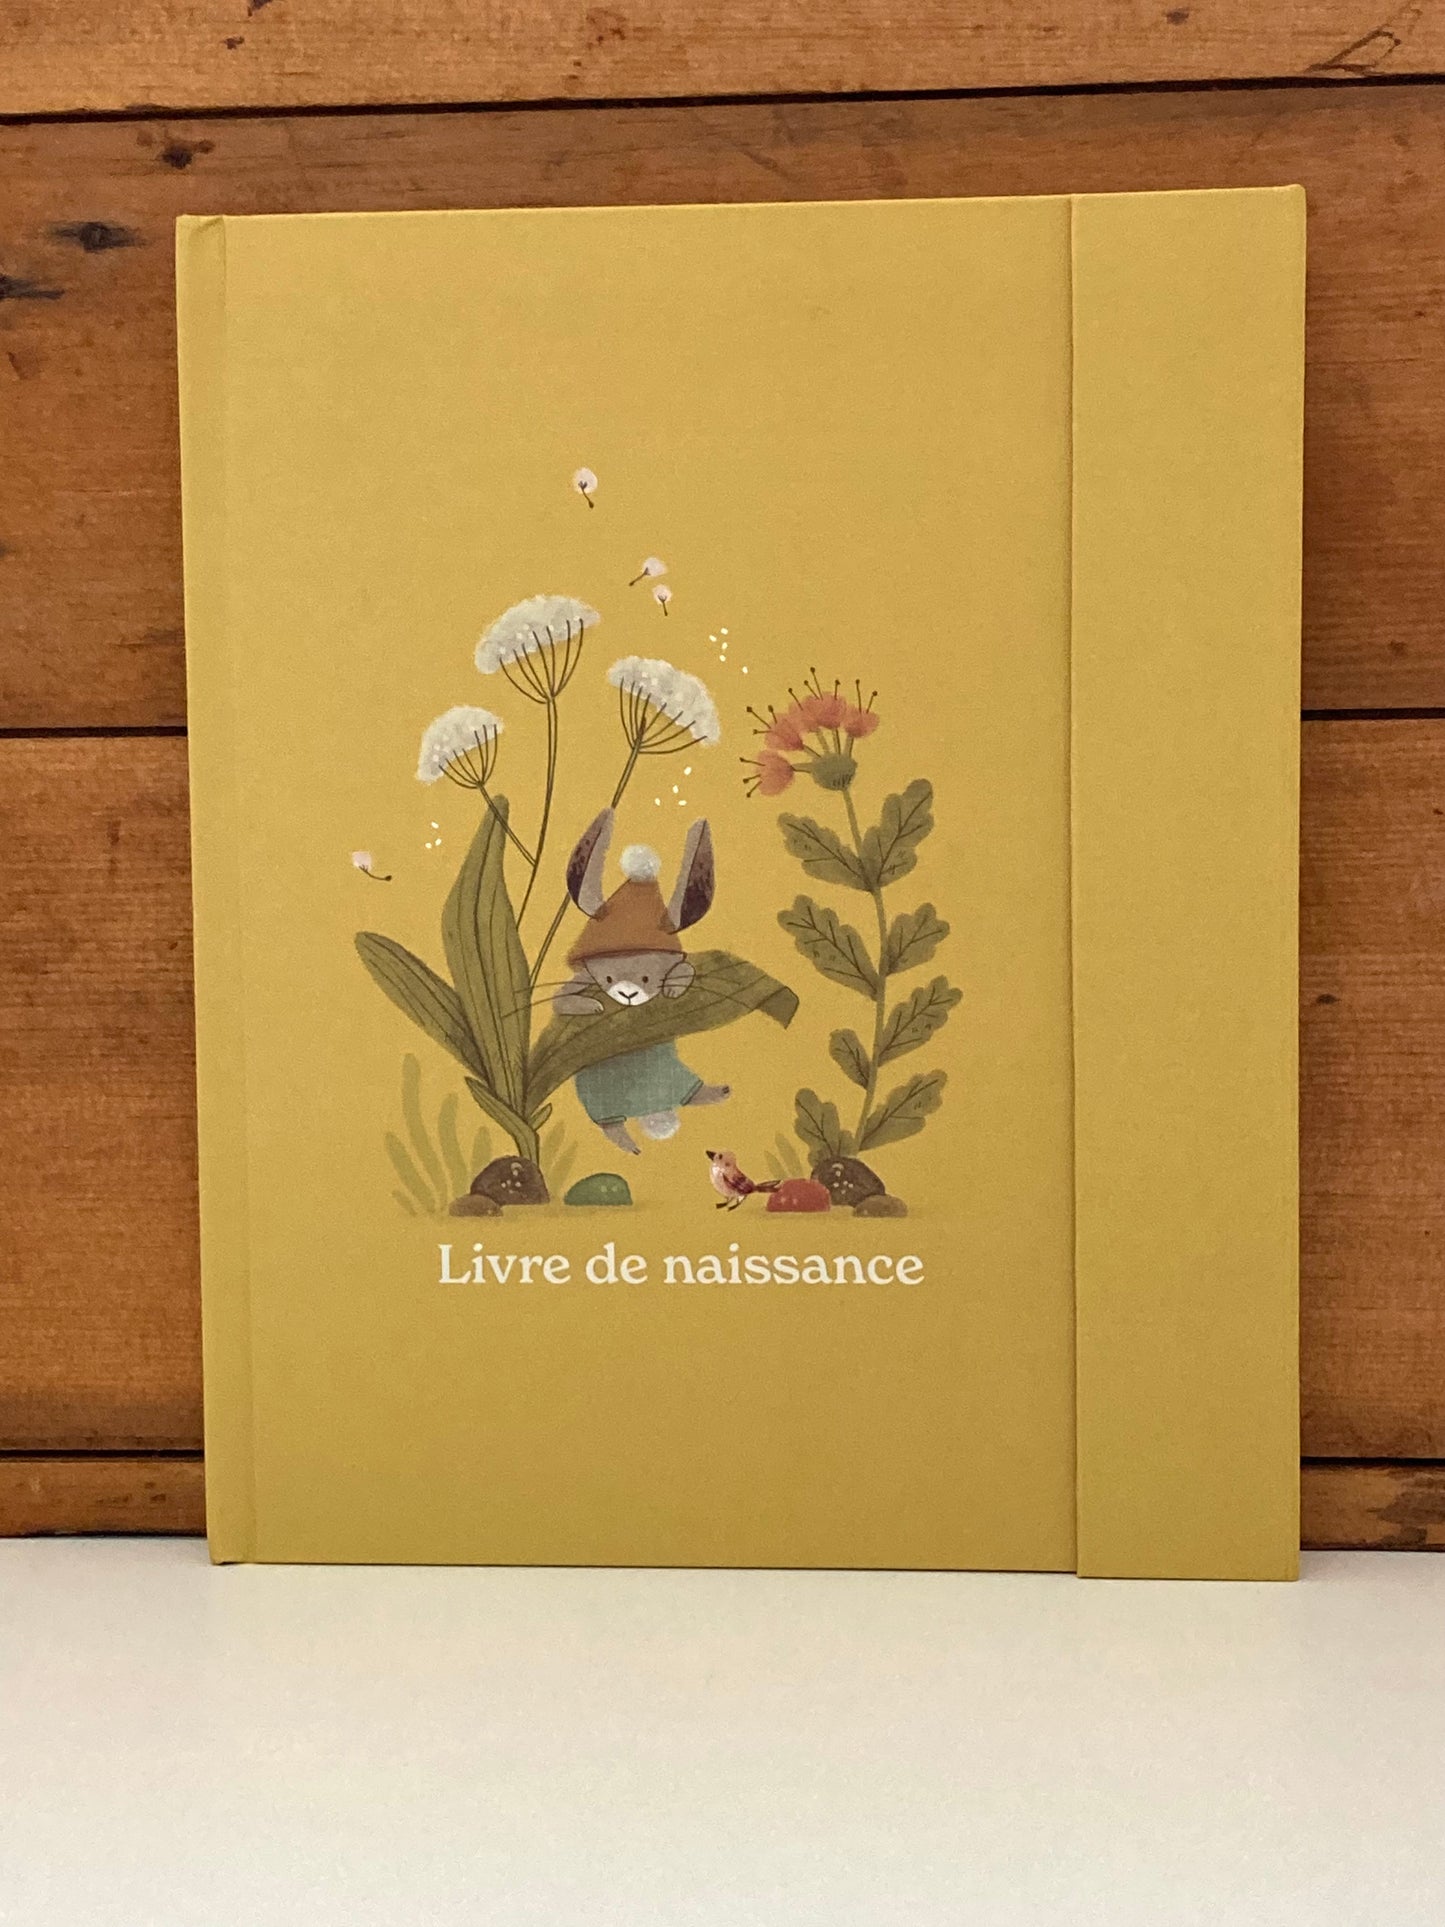 Welcome Baby Book - LIVRE DE NAISSANCE … en français!